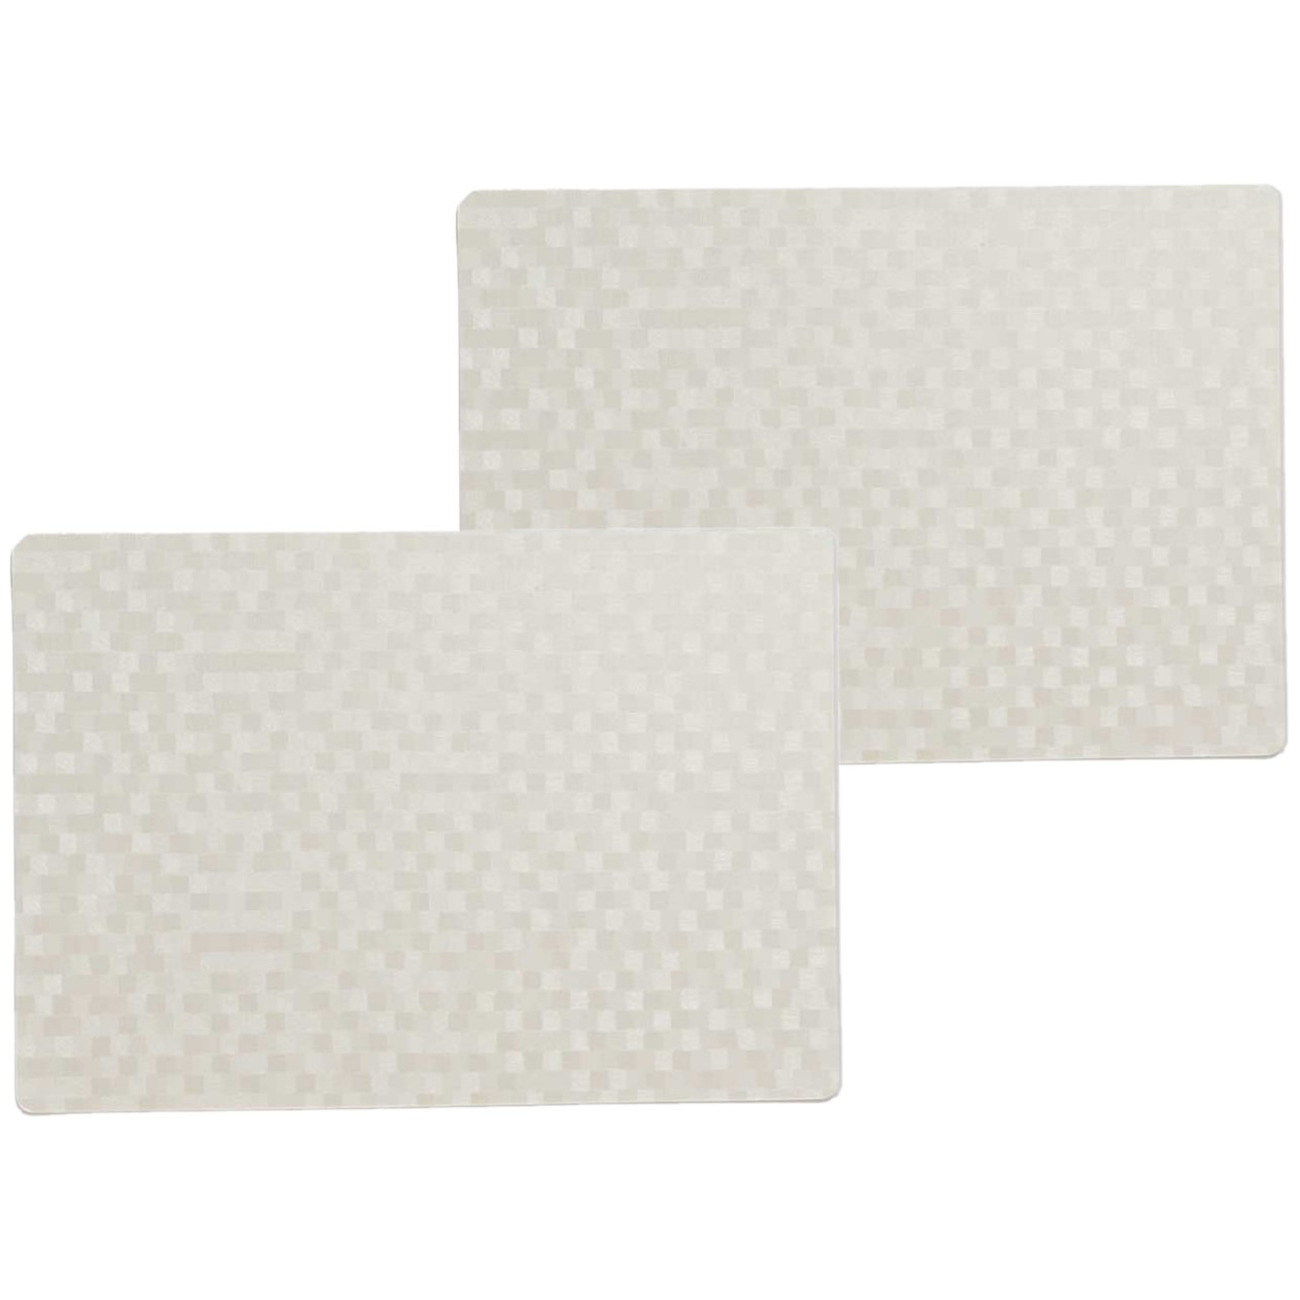 Wicotex 10x stuks stevige luxe Tafel placemats Stones wit 30 x 43 cm -